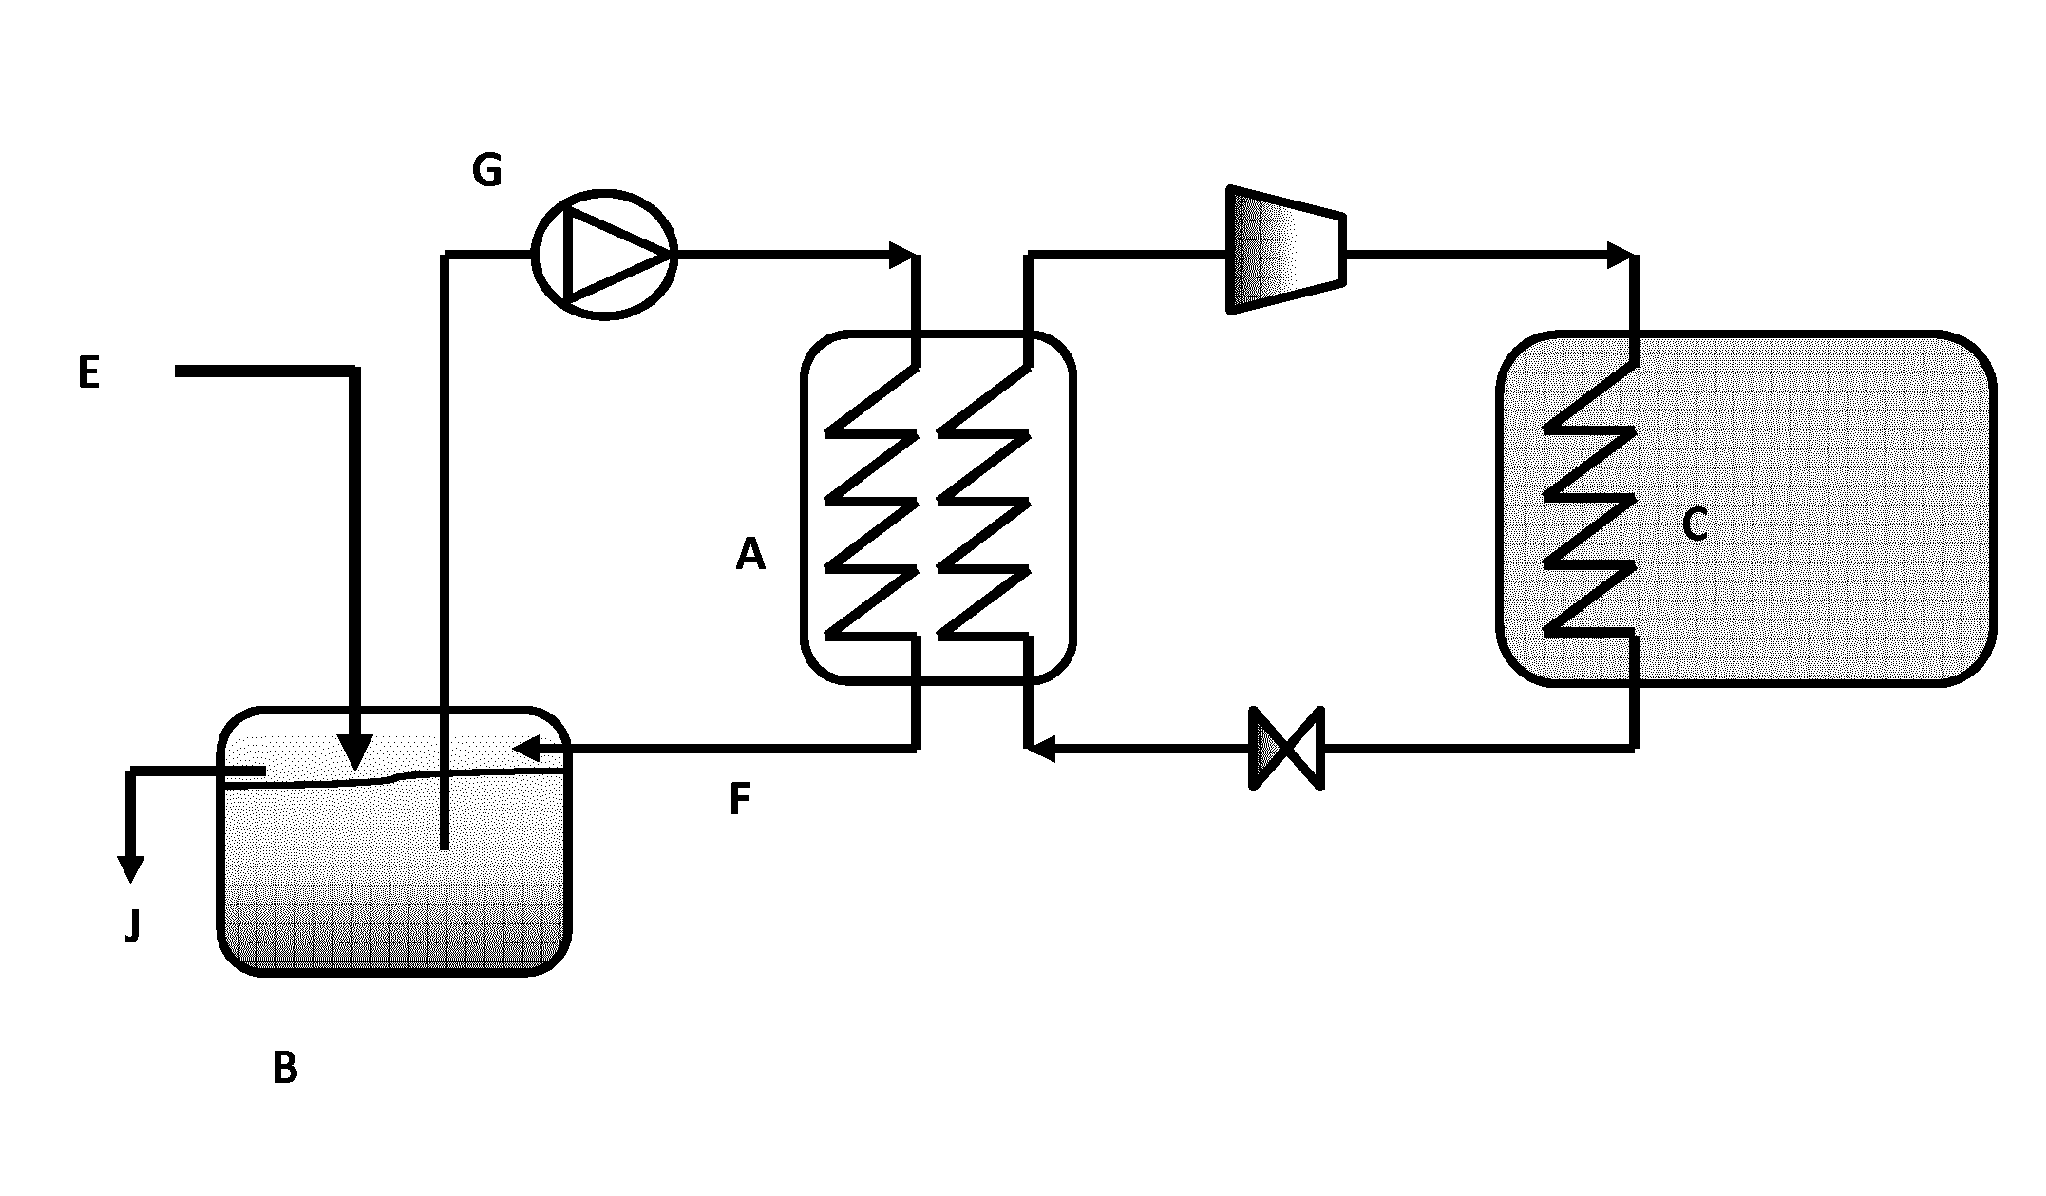 Heat pump system using latent heat